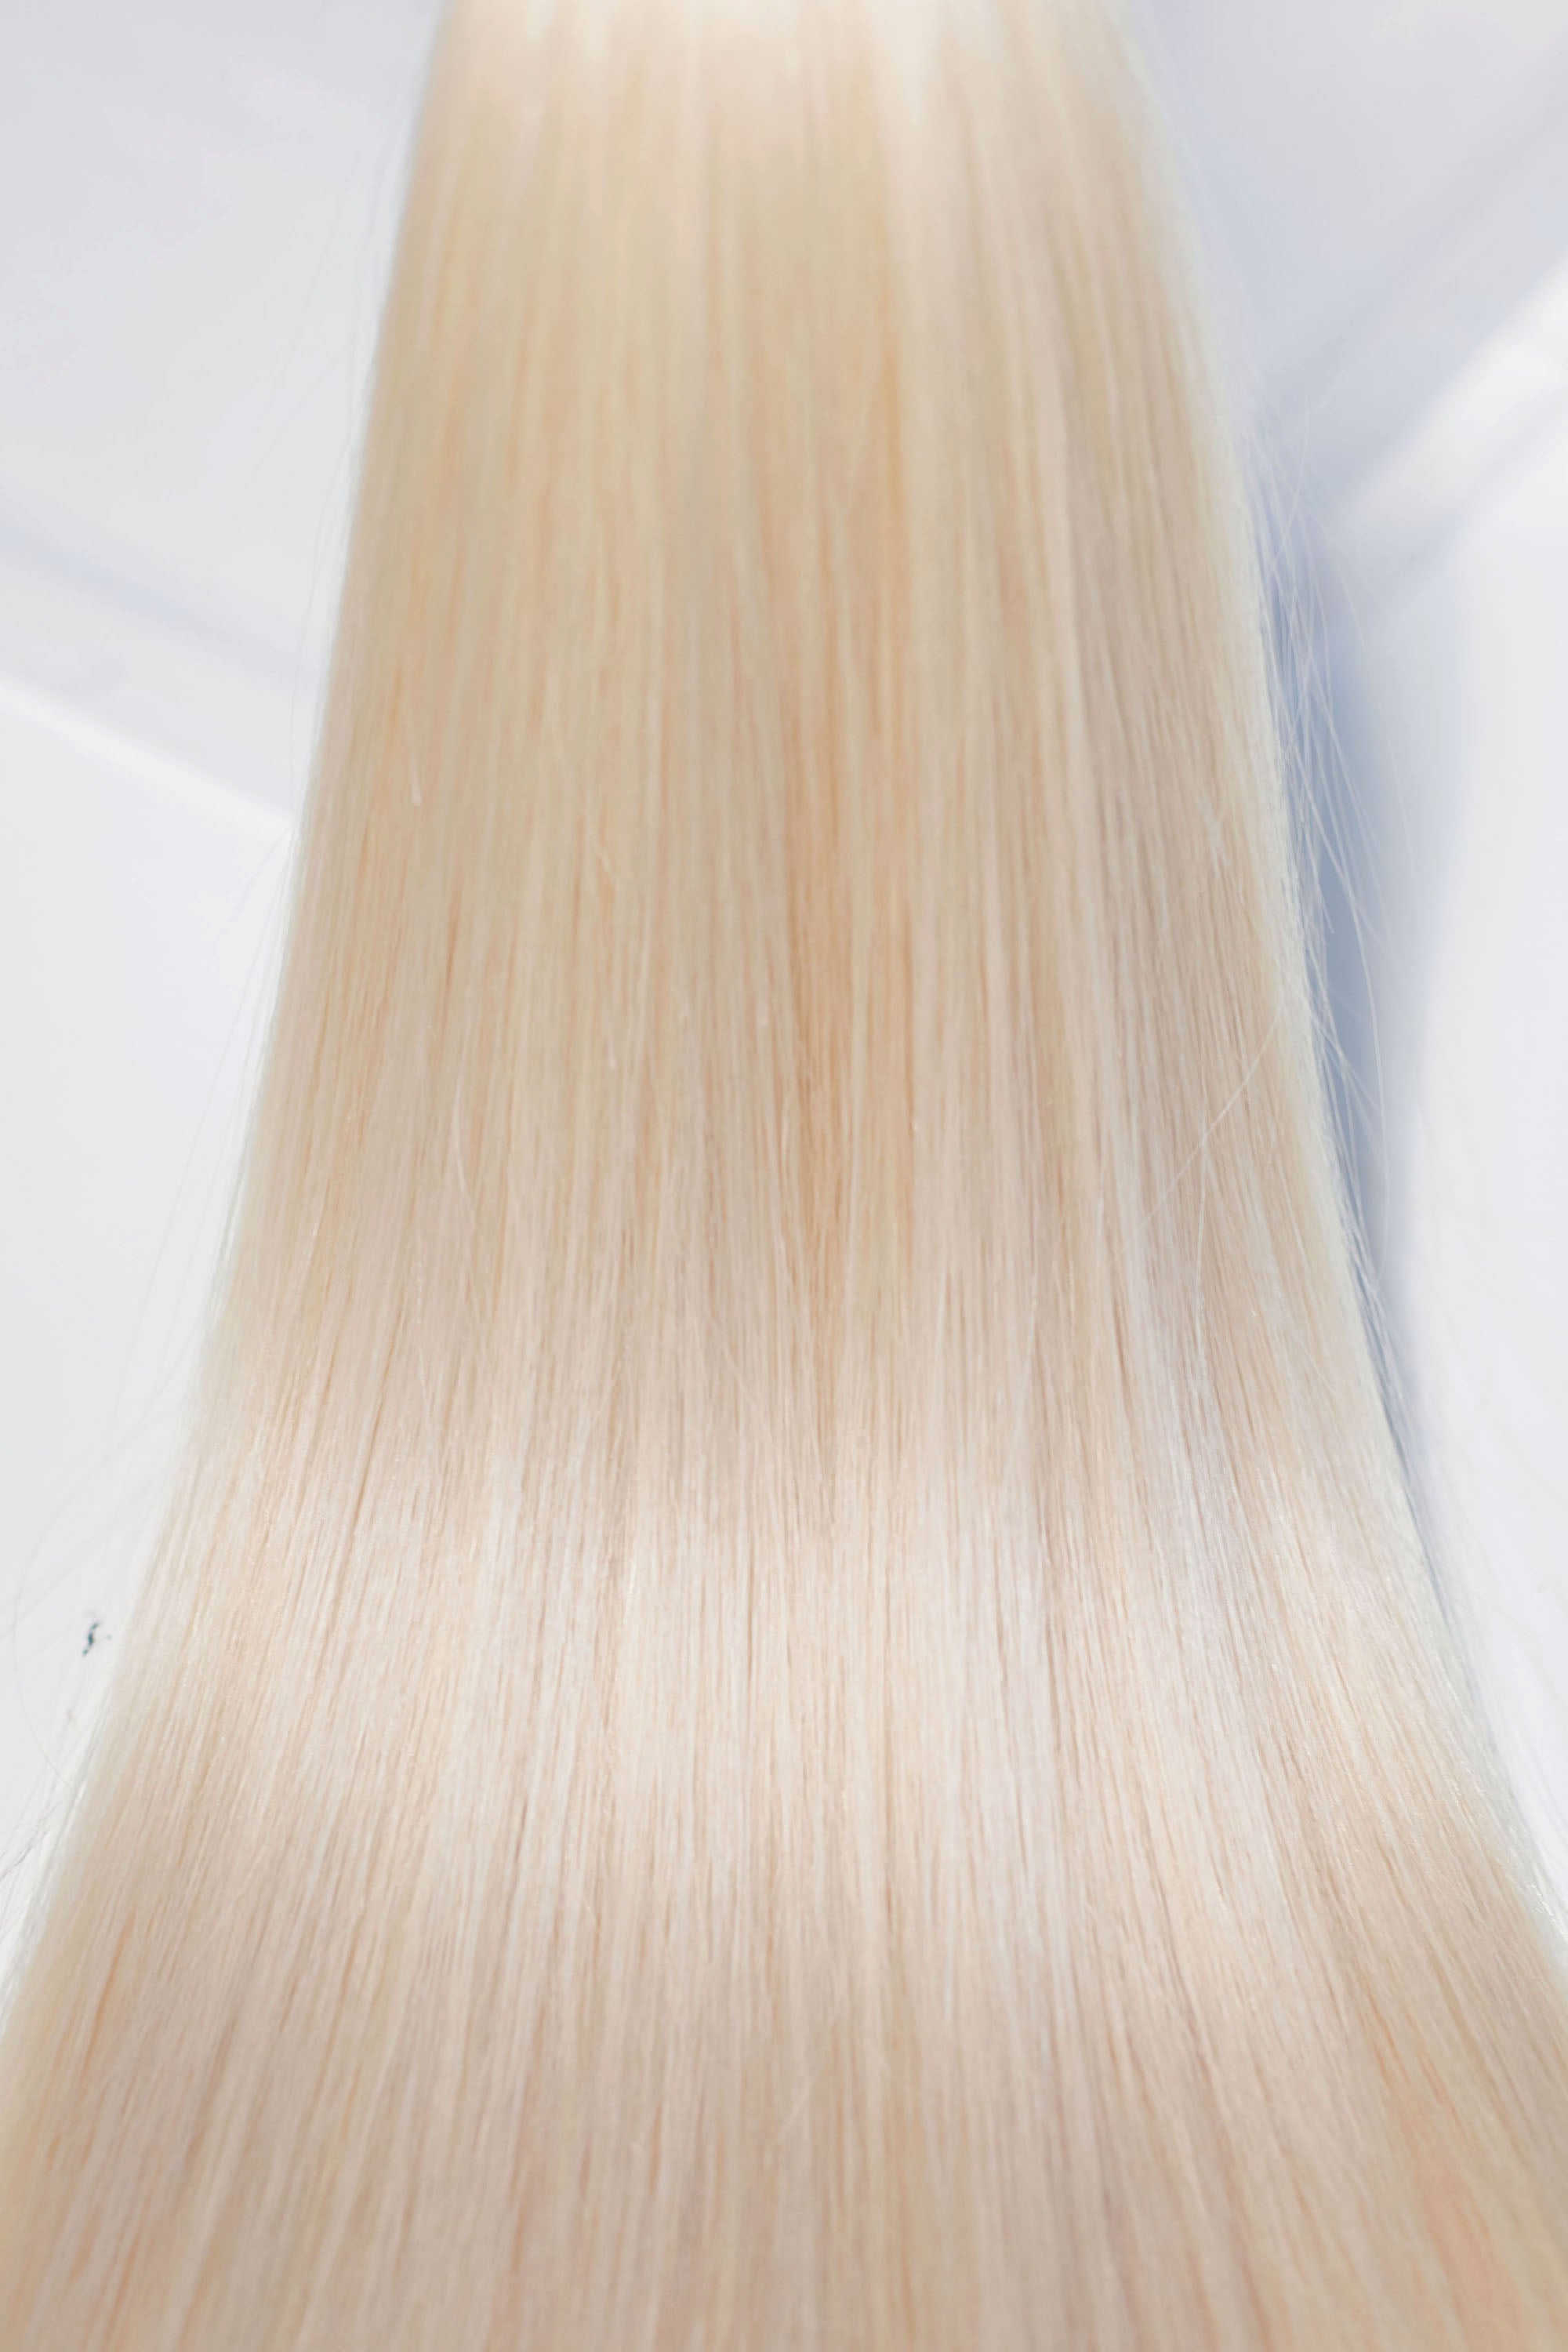 Behair professional Keratin Tip "Premium" 16" (40cm) Natural Straight Ice Blond #000 - 25g (Standart - 0.7g each pcs) hair extensions